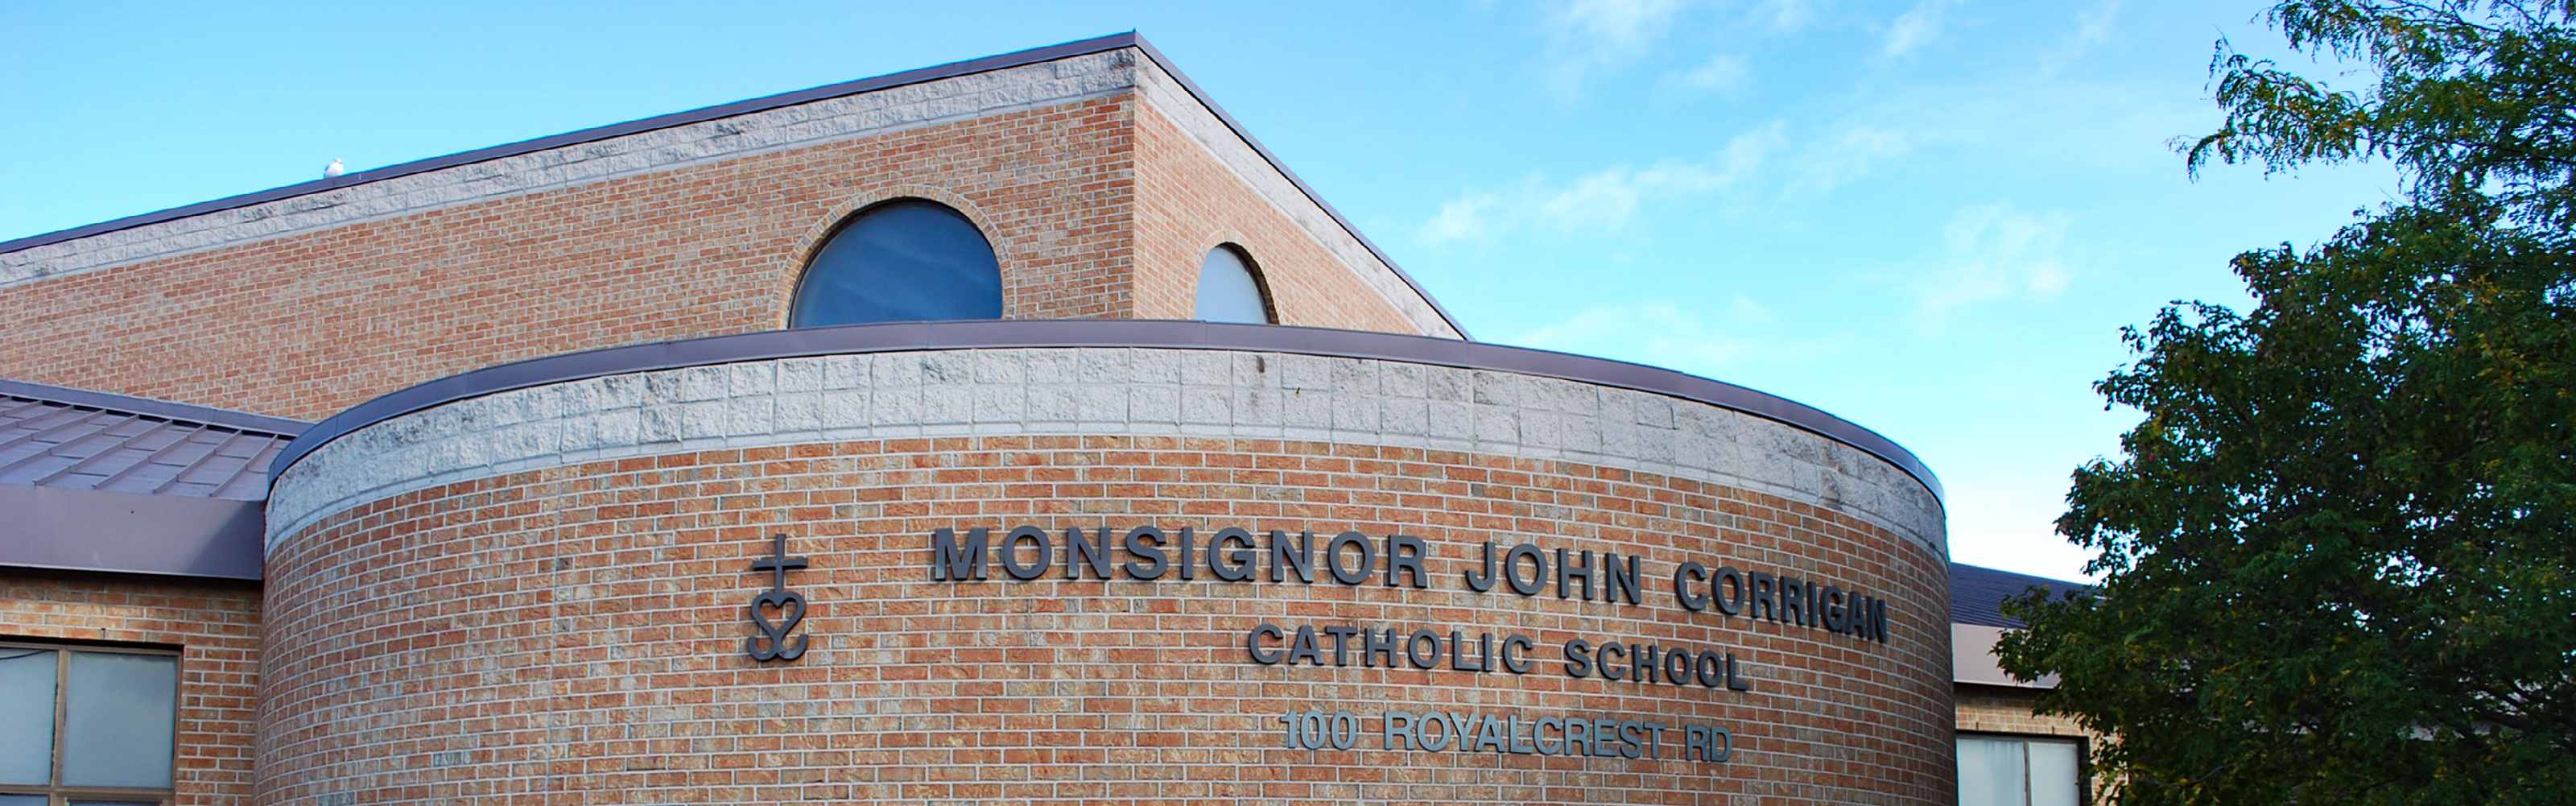 Front of the Monsignor John Corrigan Catholic School building